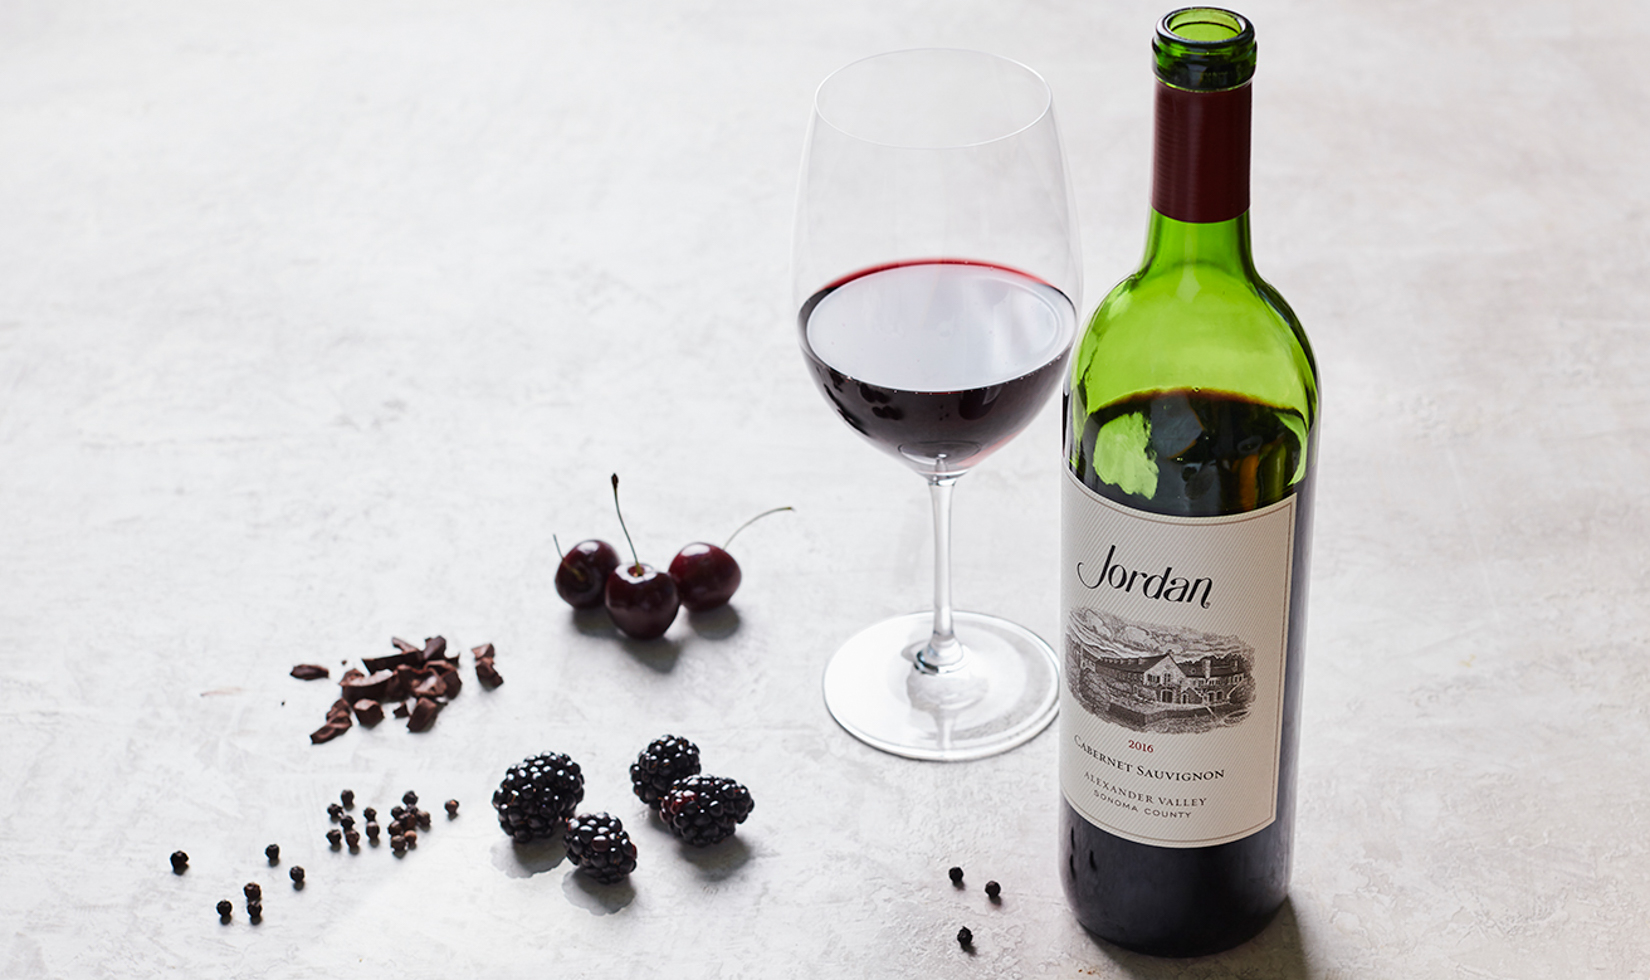 jordan winery 2016 cabernet sauvignon bottle with wine glass